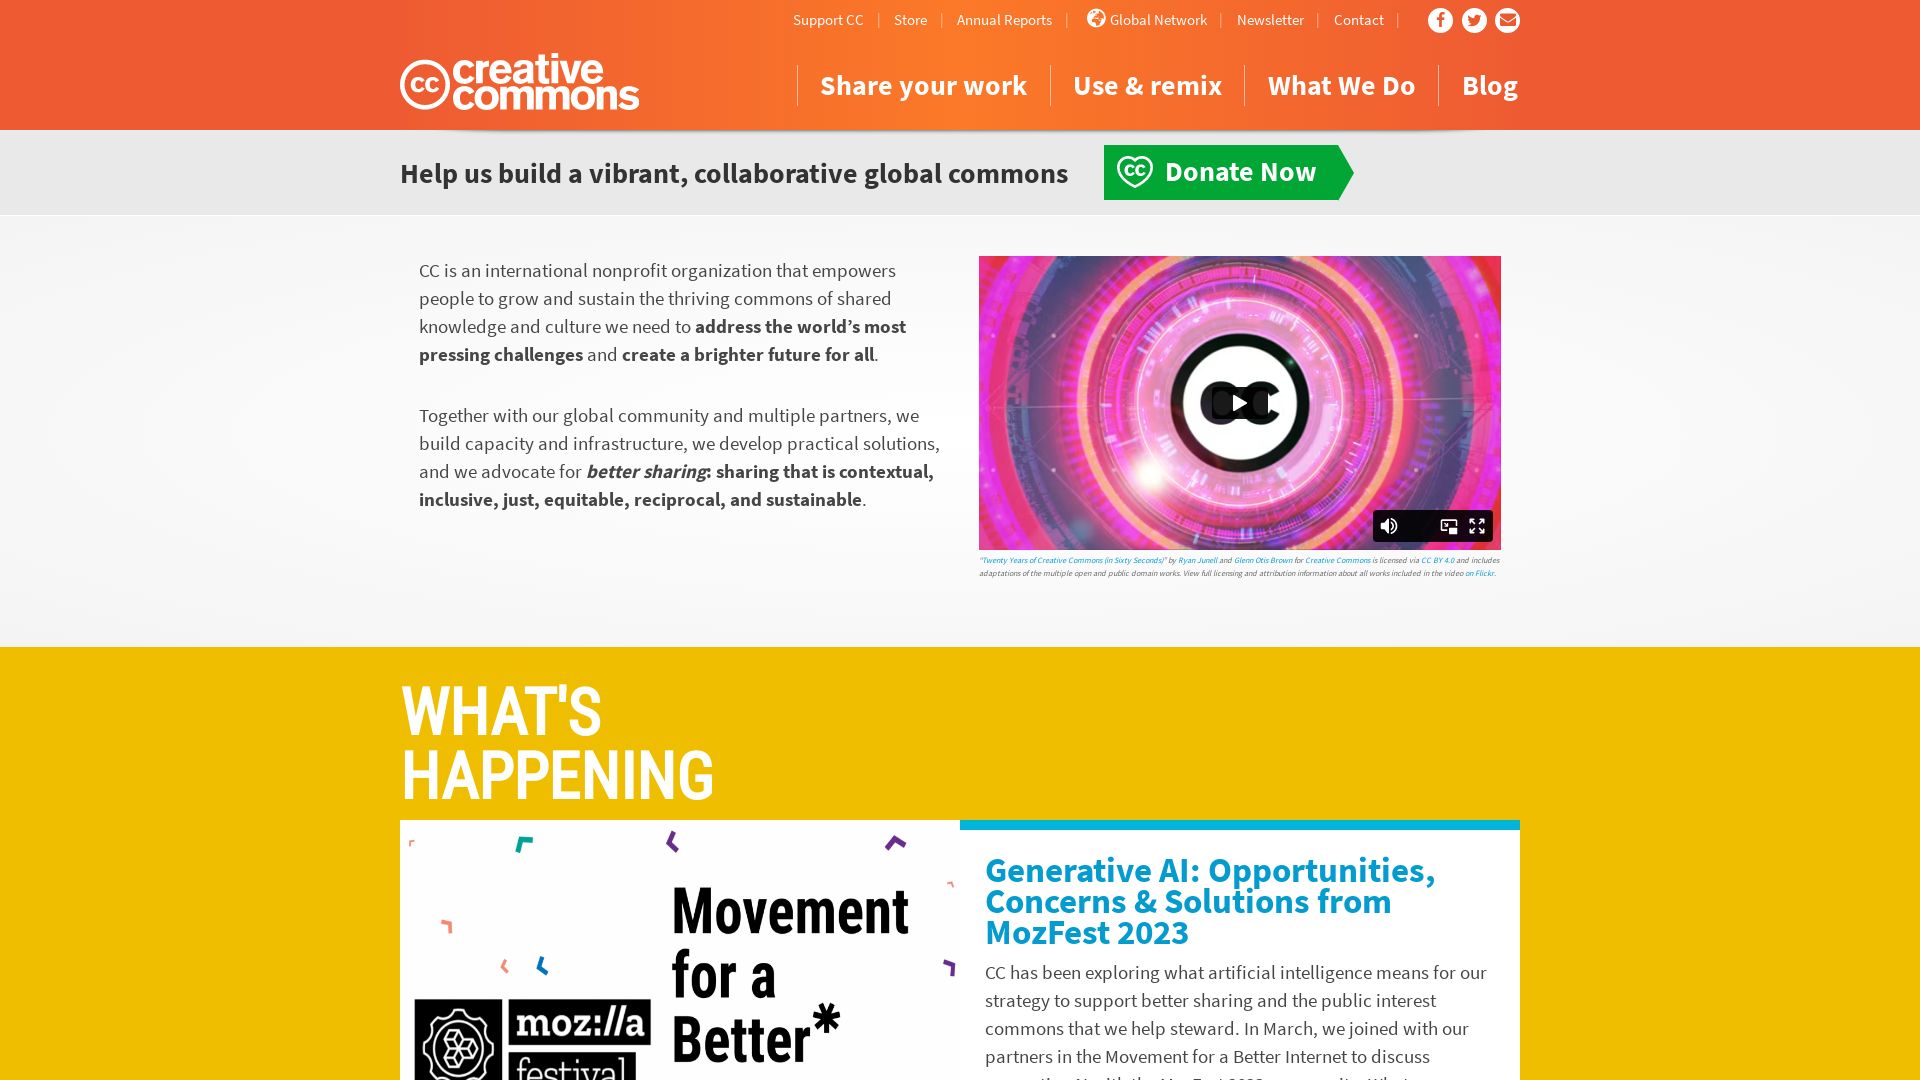 Website status creativecommons.org is   ONLINE